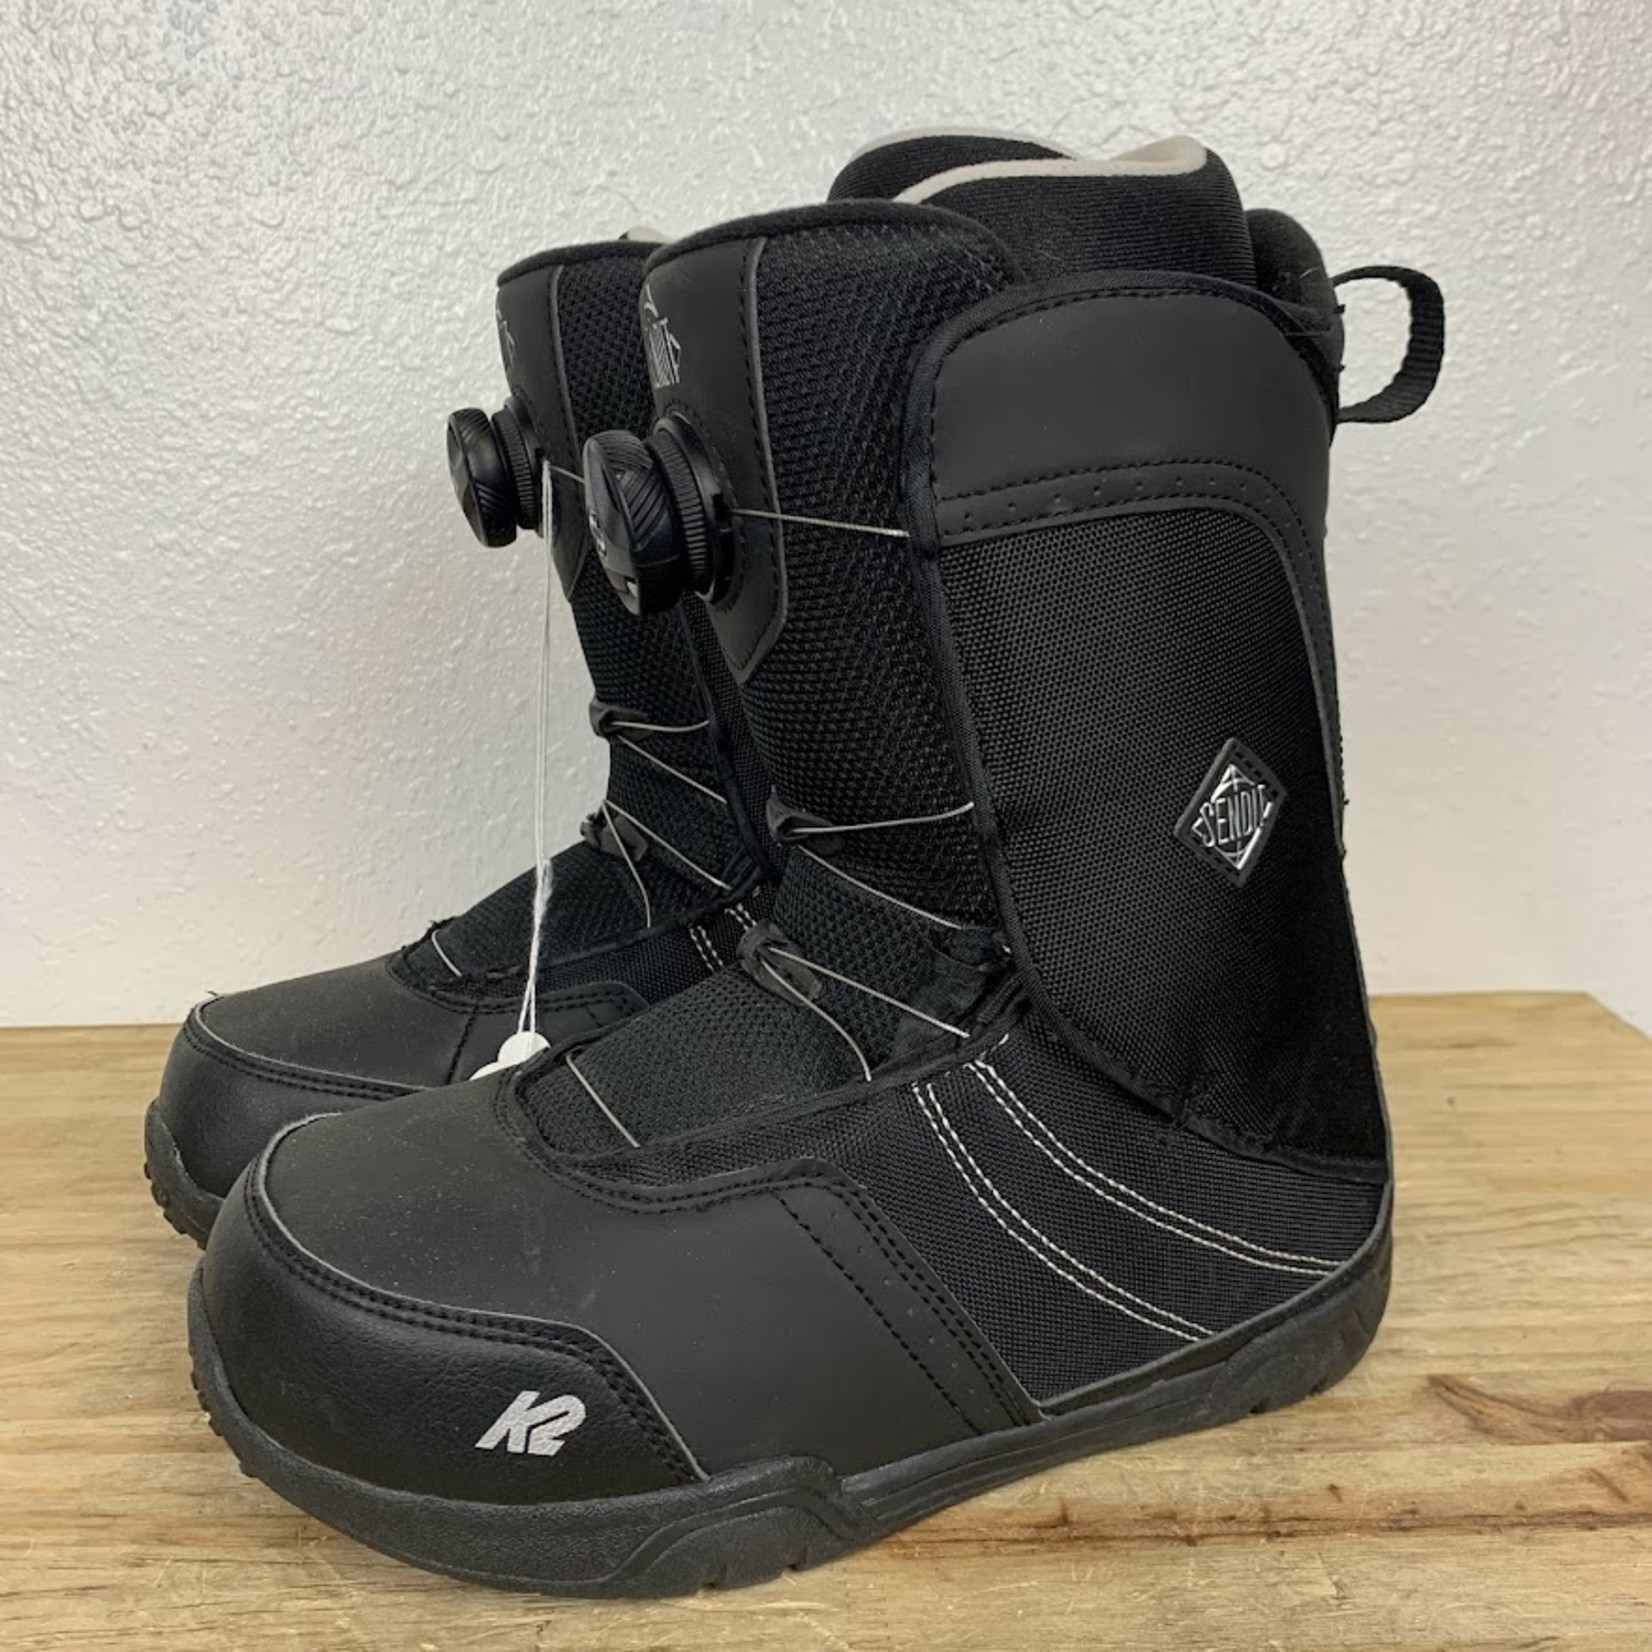 K2 K2 Sendit Boa Women's Snowboard Boots - Black Size 6 WMNS